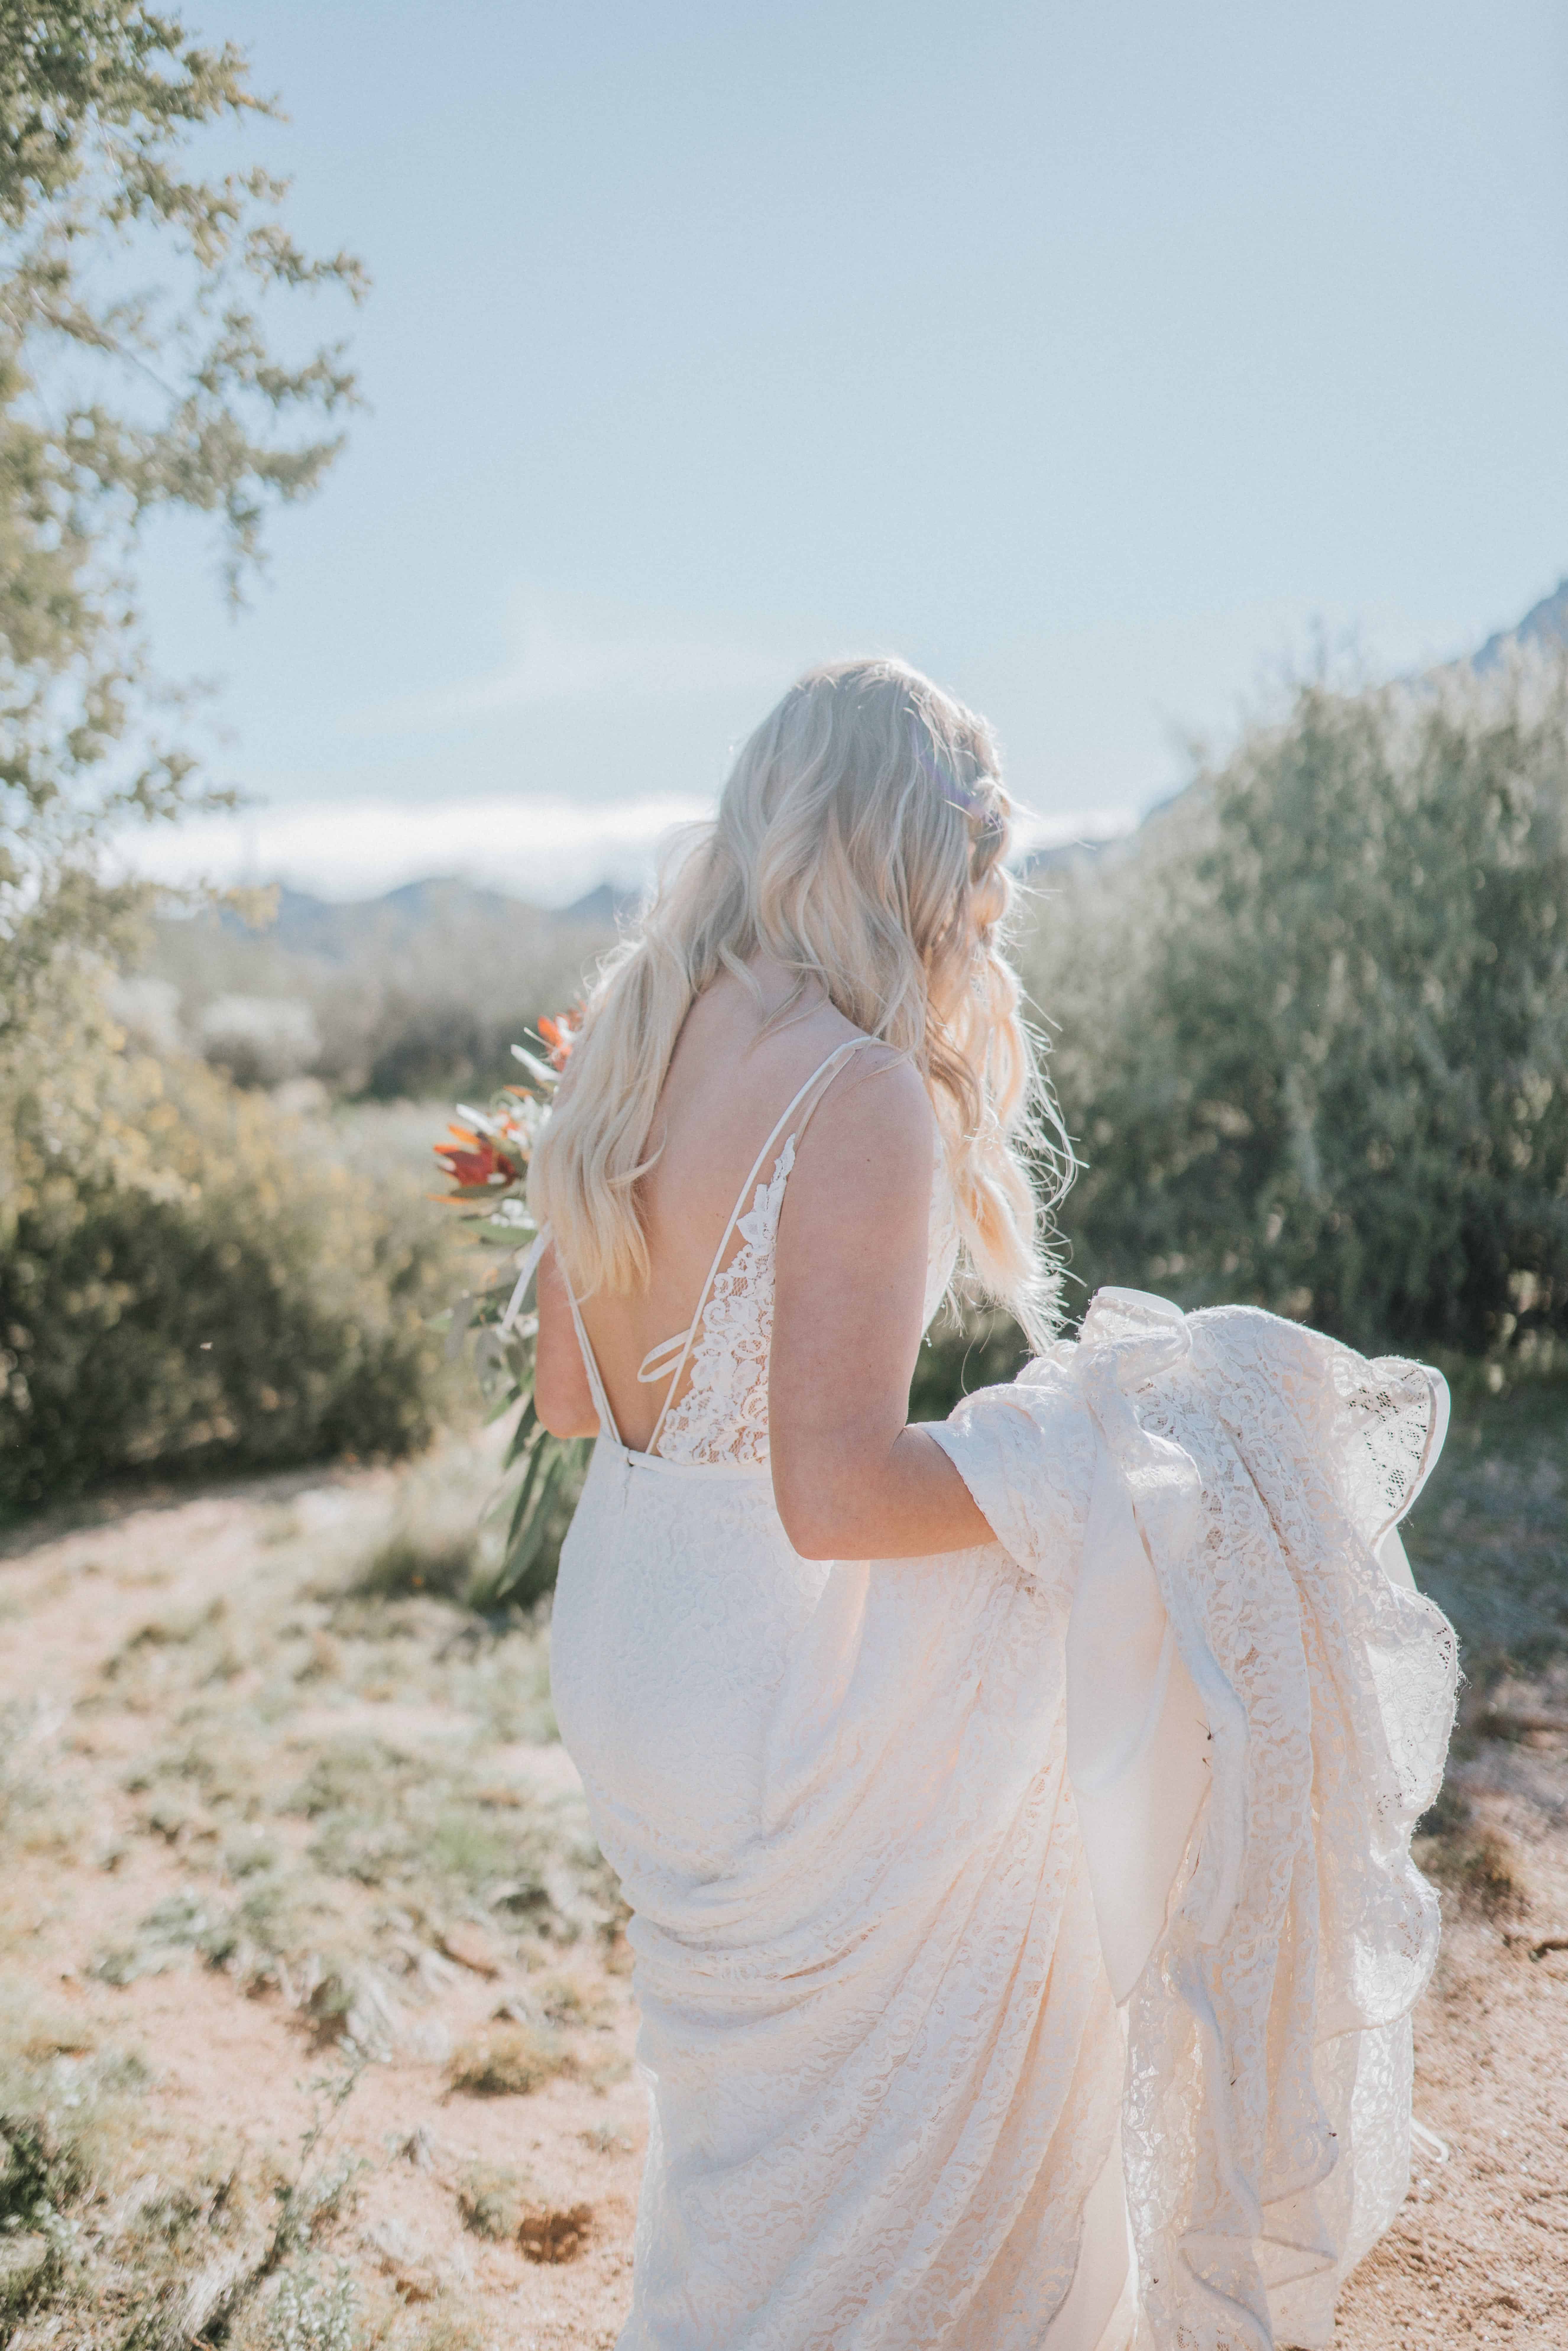 Back shot of bride walking outside while holding the bottom portion of her wedding dress